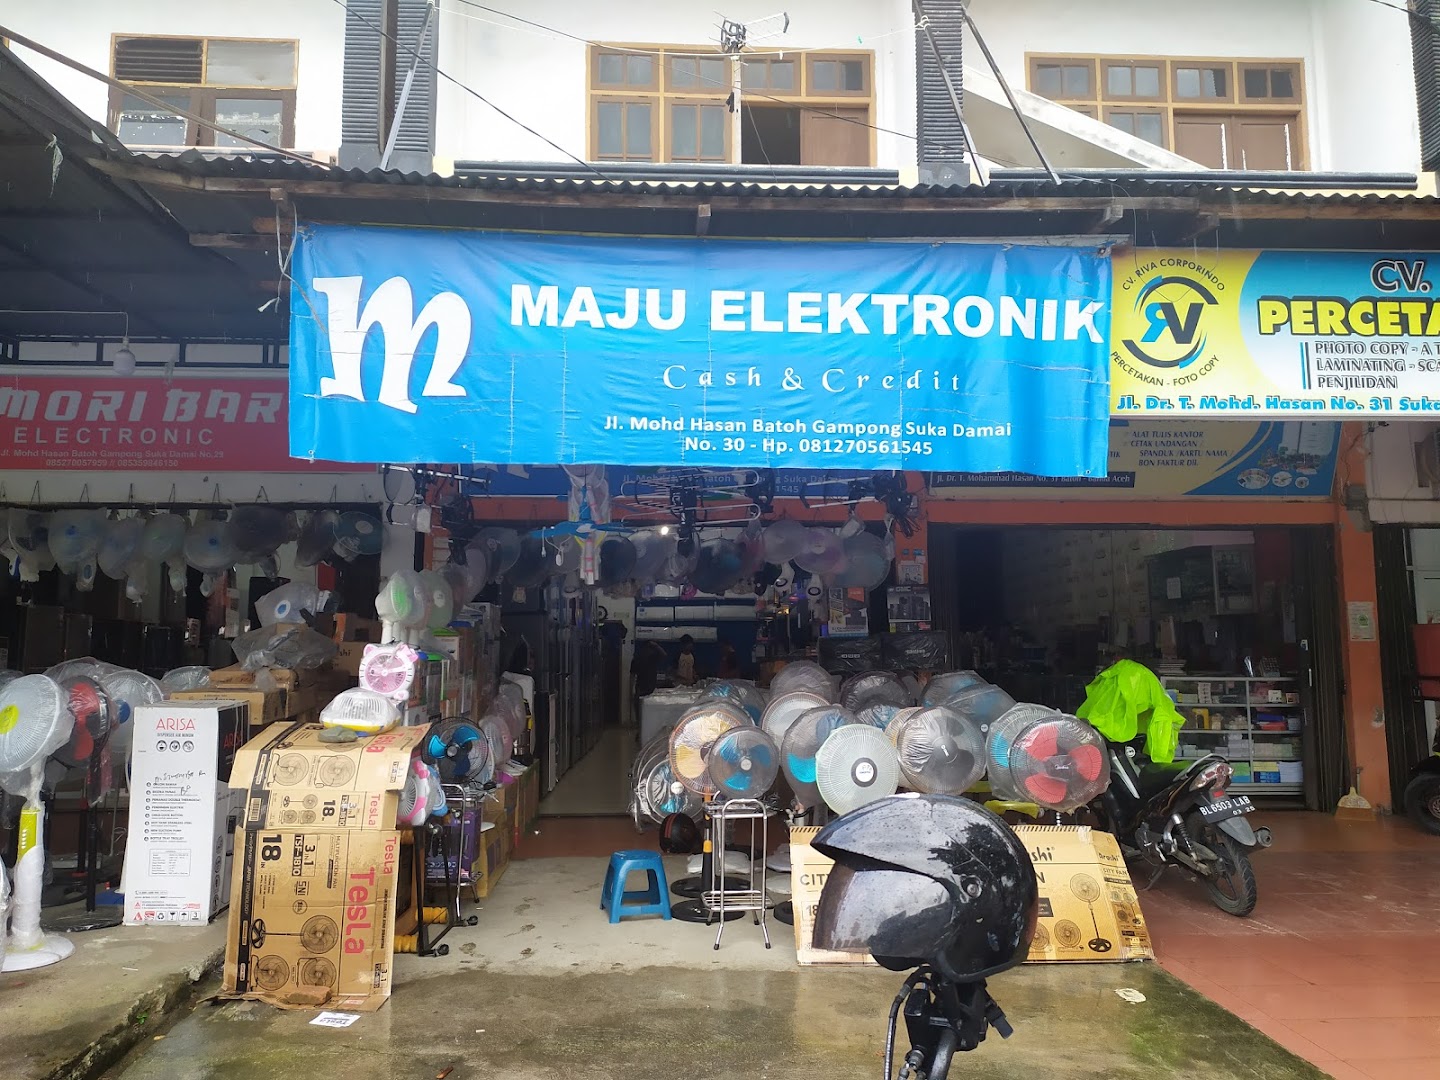 Maju Elektronik Lueng Bata Banda Aceh Photo